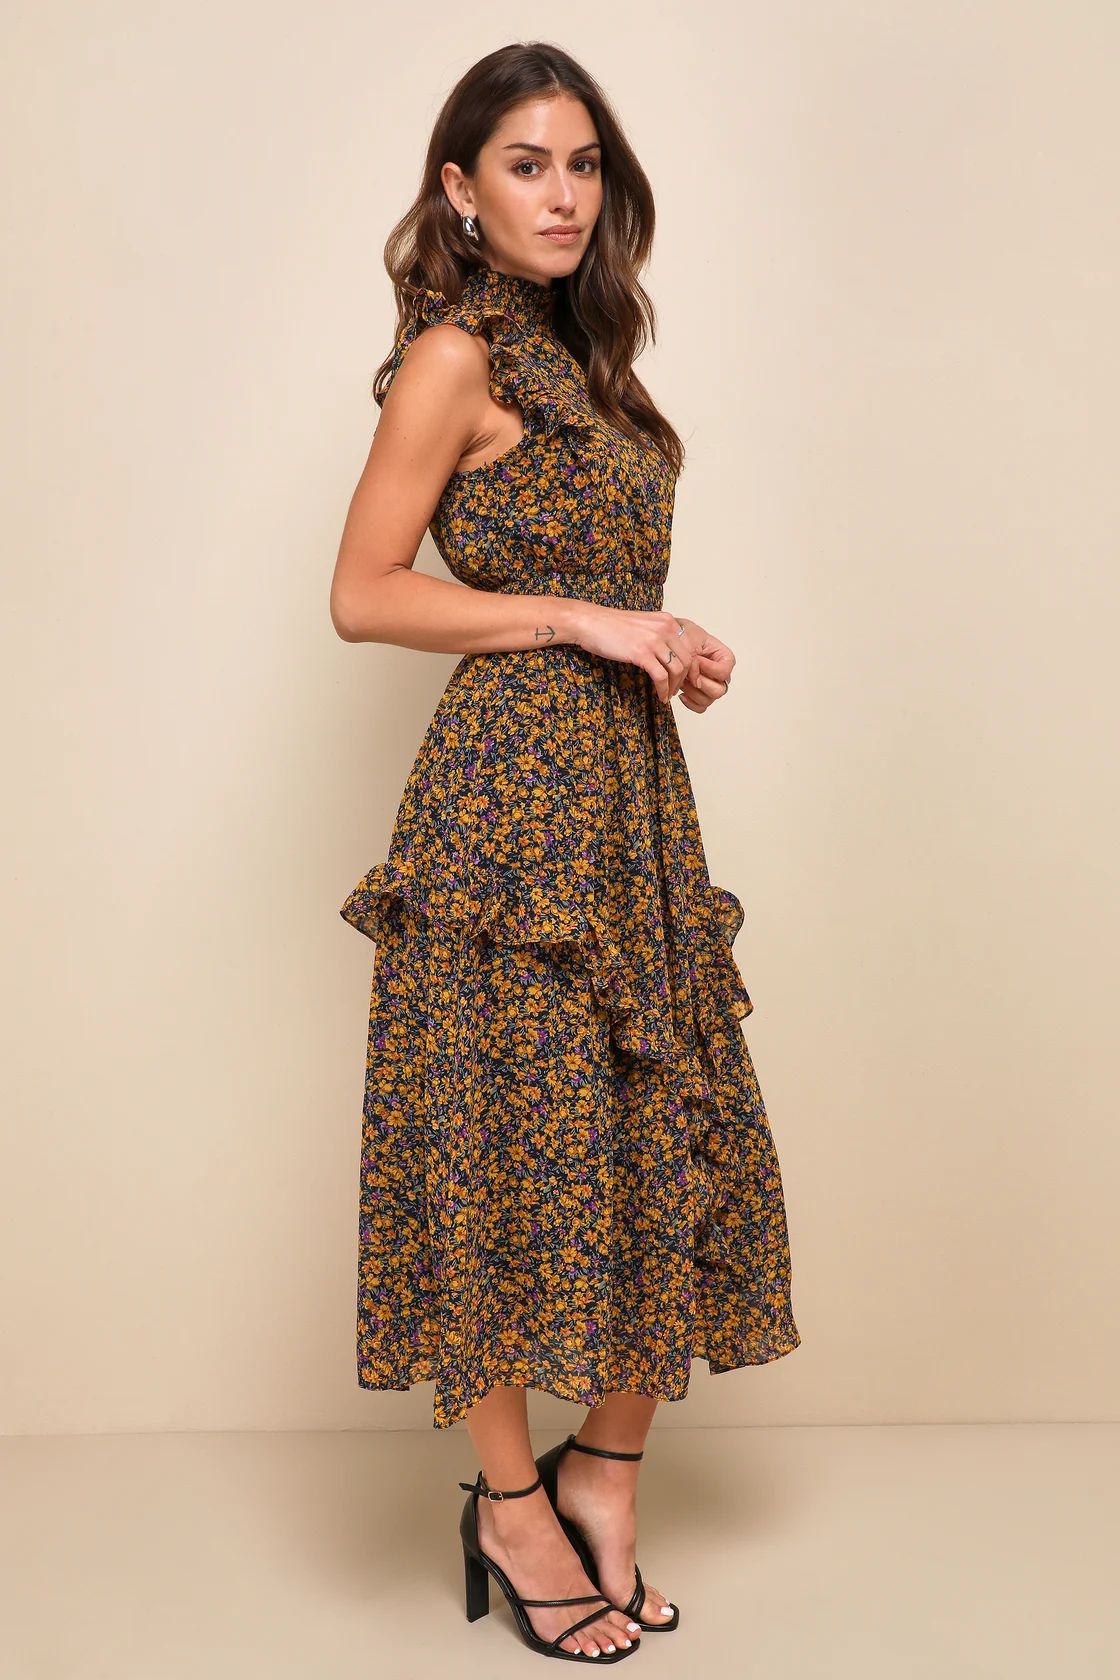 Evalina Mustard Yellow Floral Print Mock Neck Midi Dress | Lulus